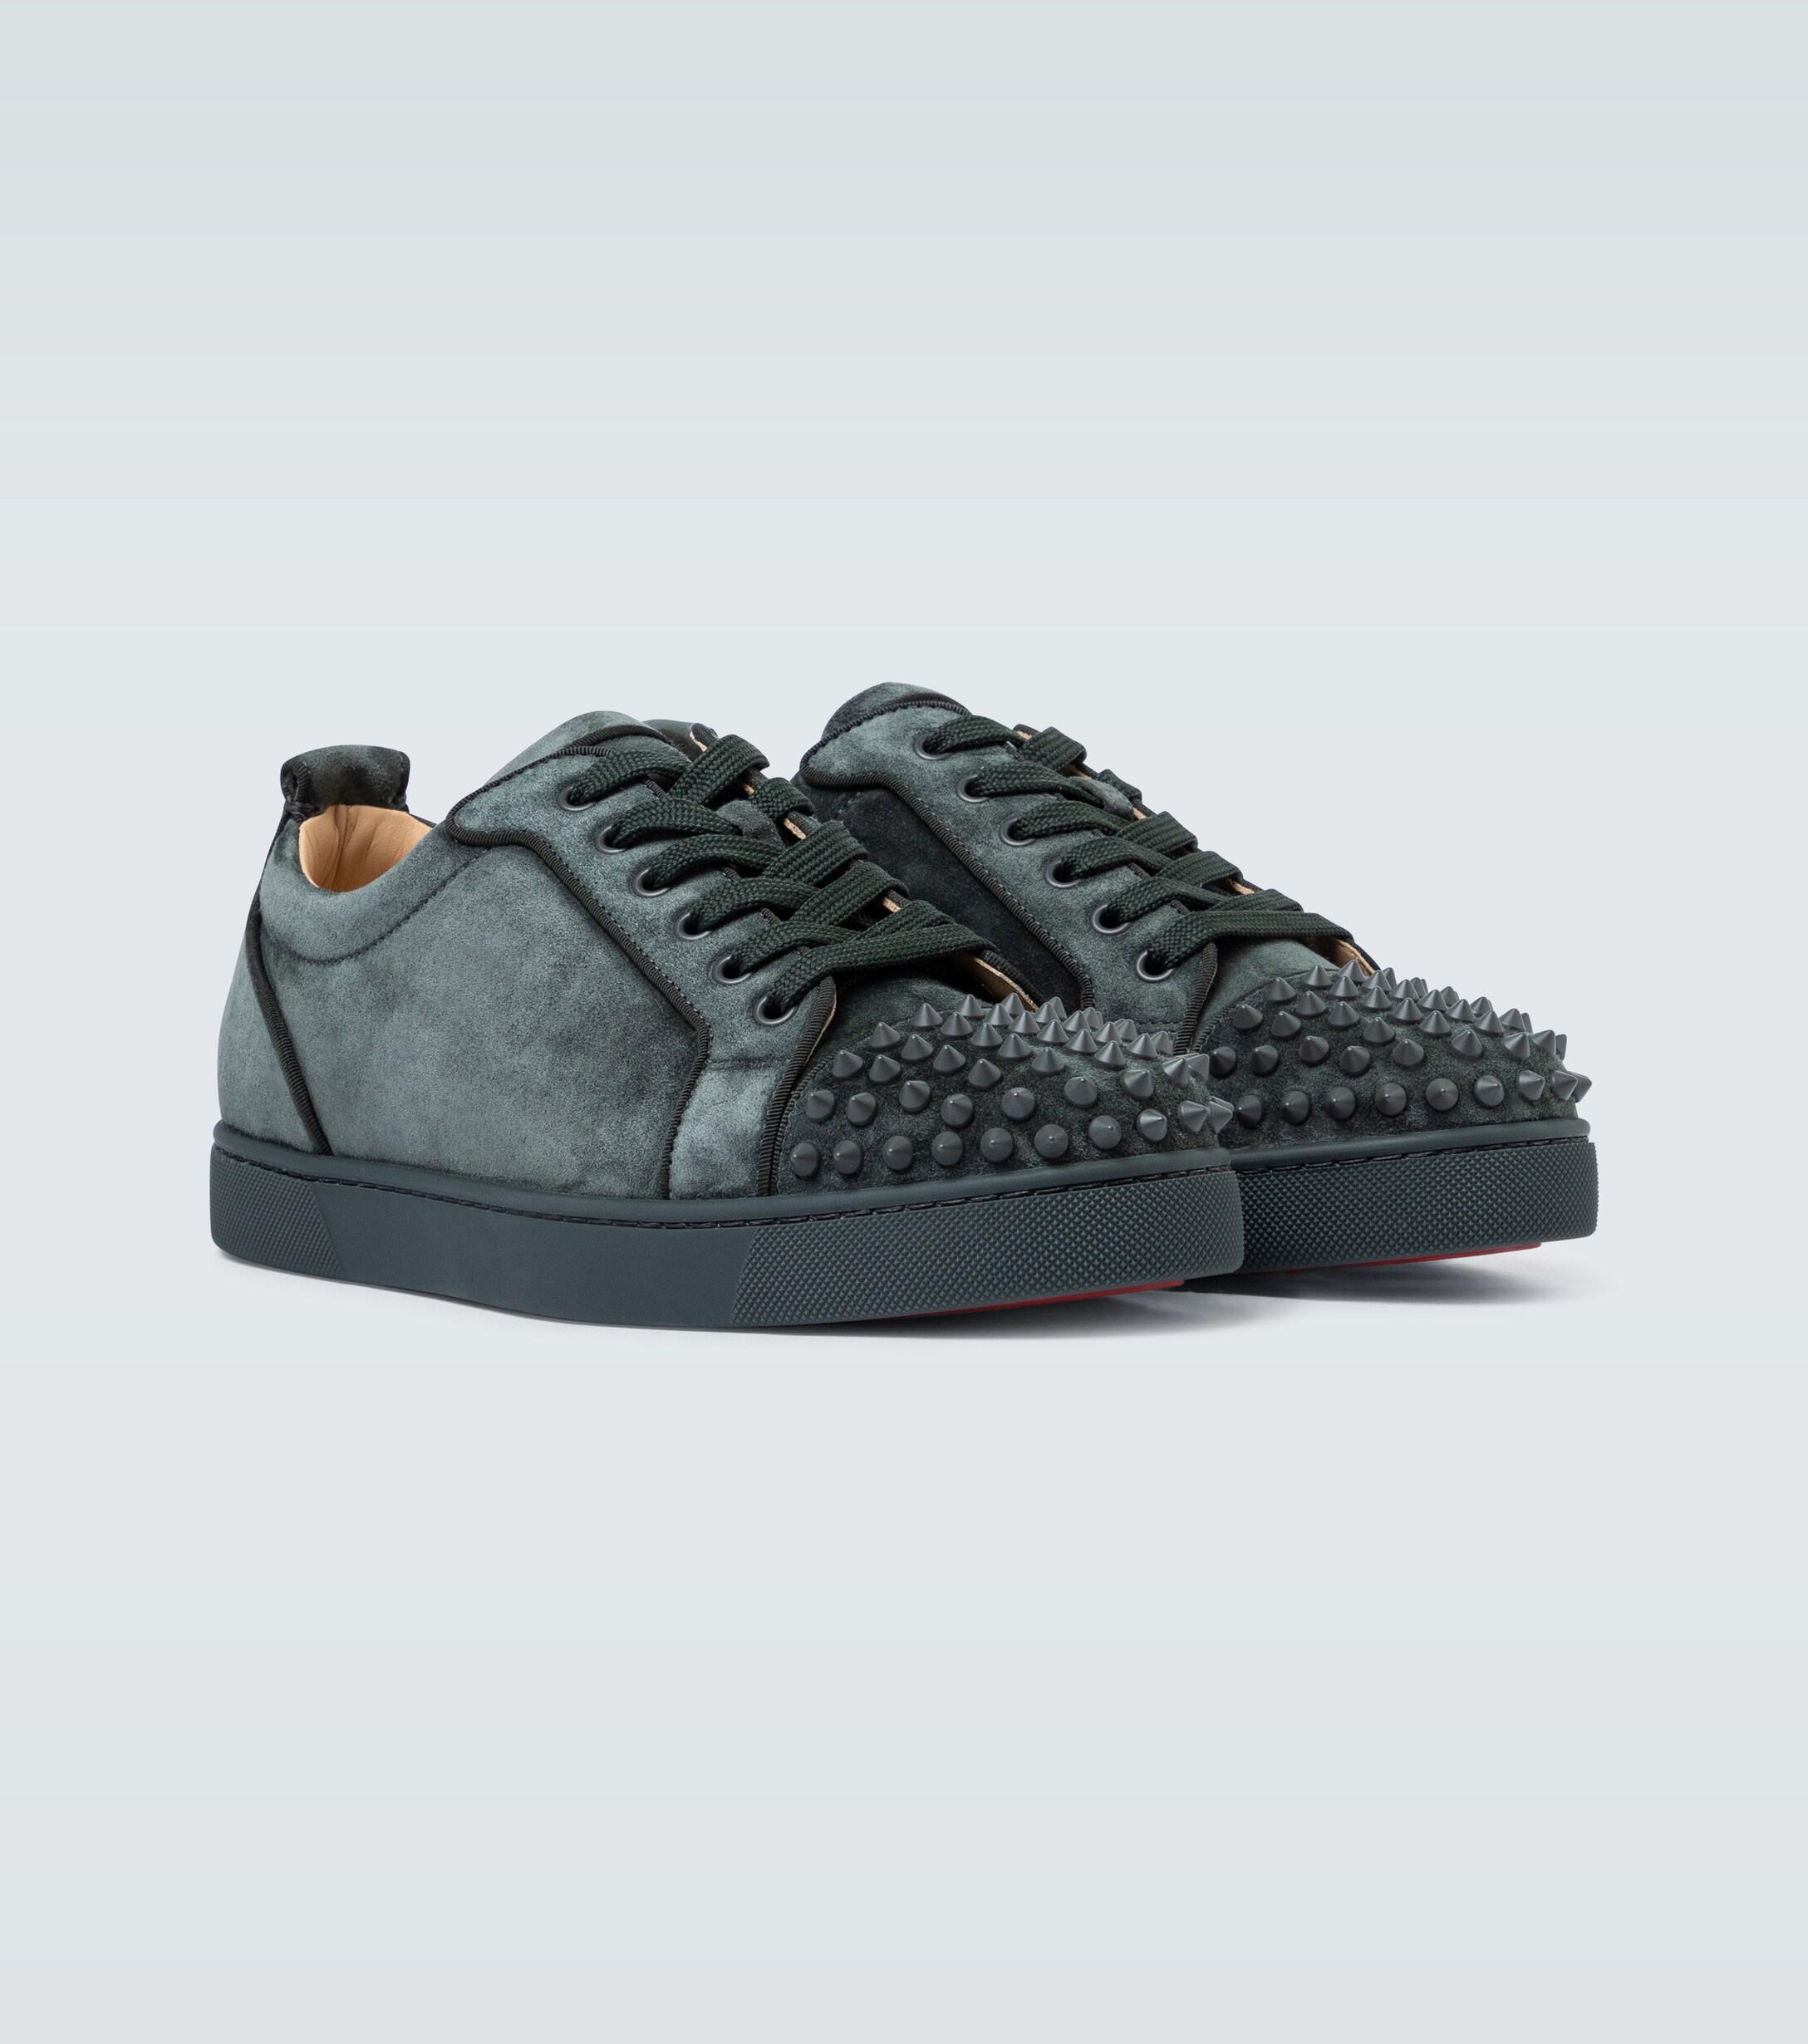 Louboutin sneakers in deutschland kaufen? (online, Schuhe, Shop)